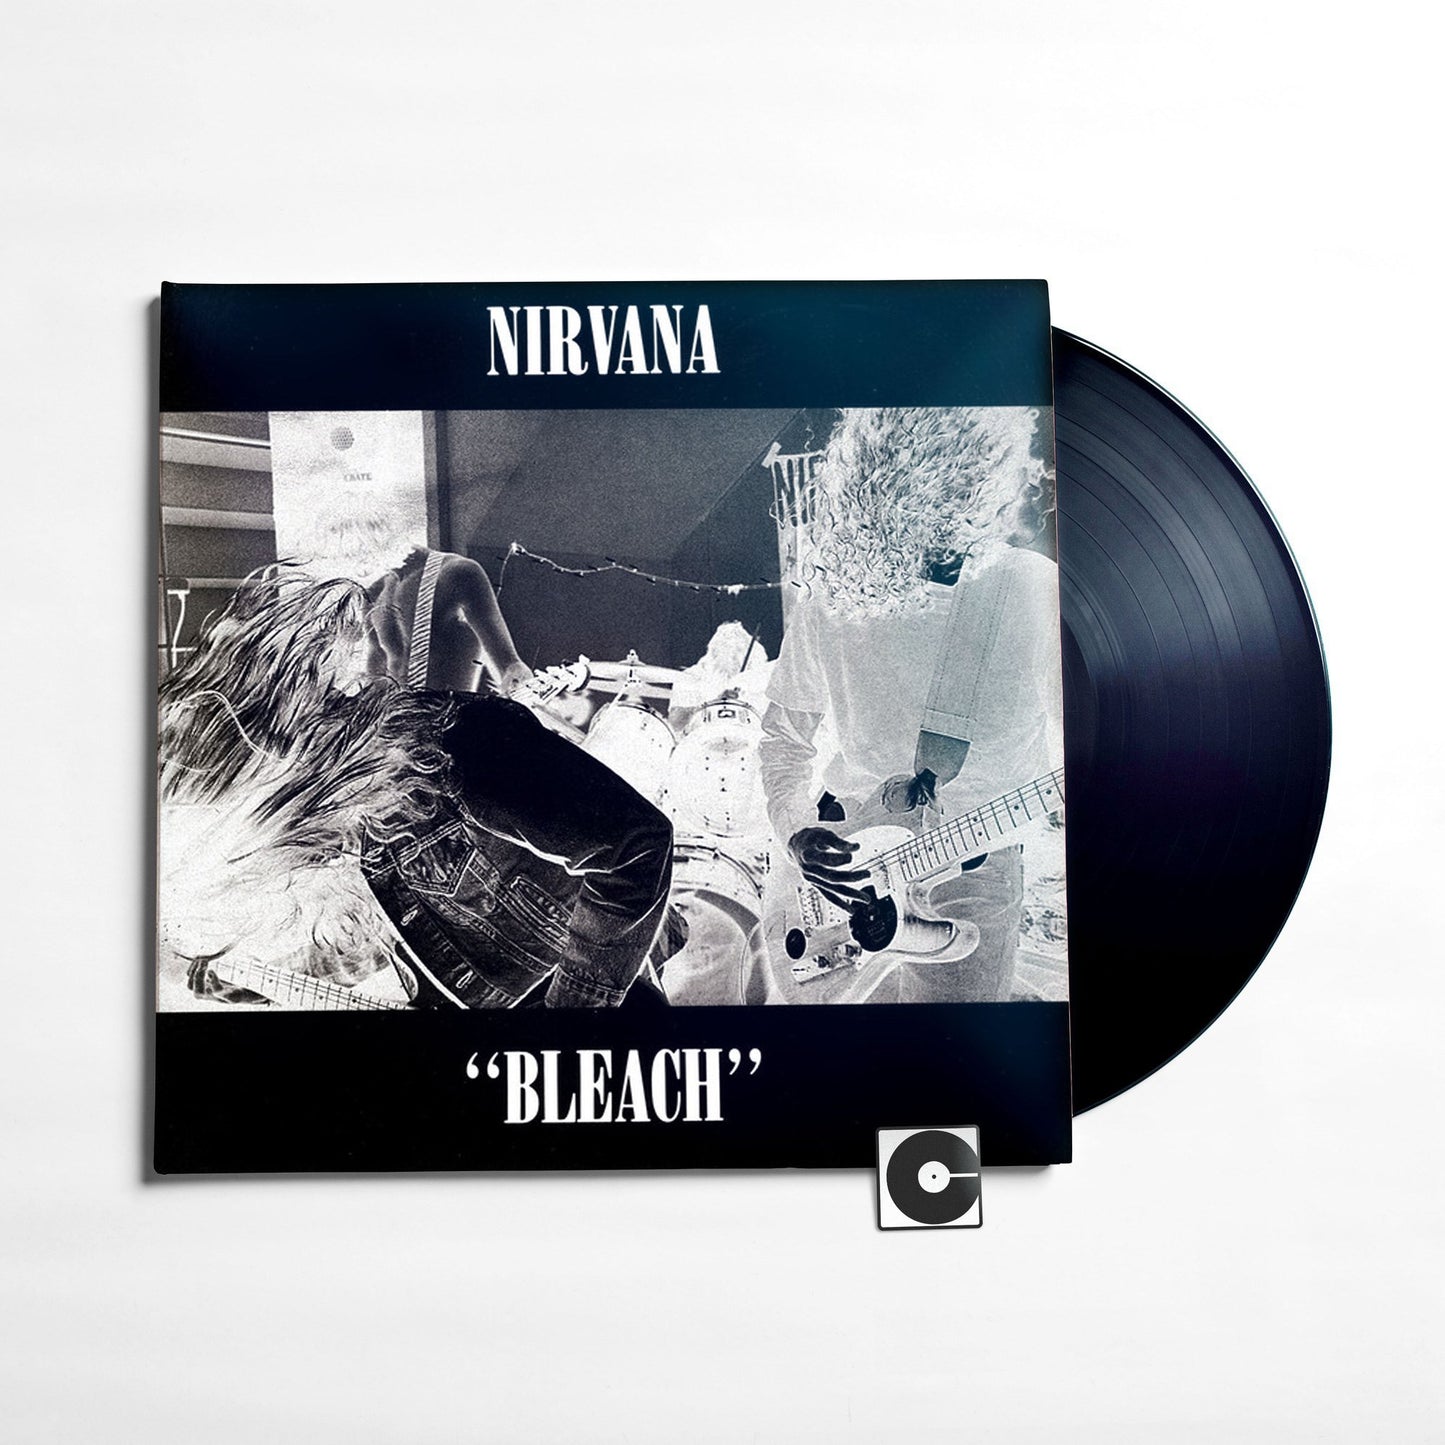 Nirvana - "Bleach" Standard Edition